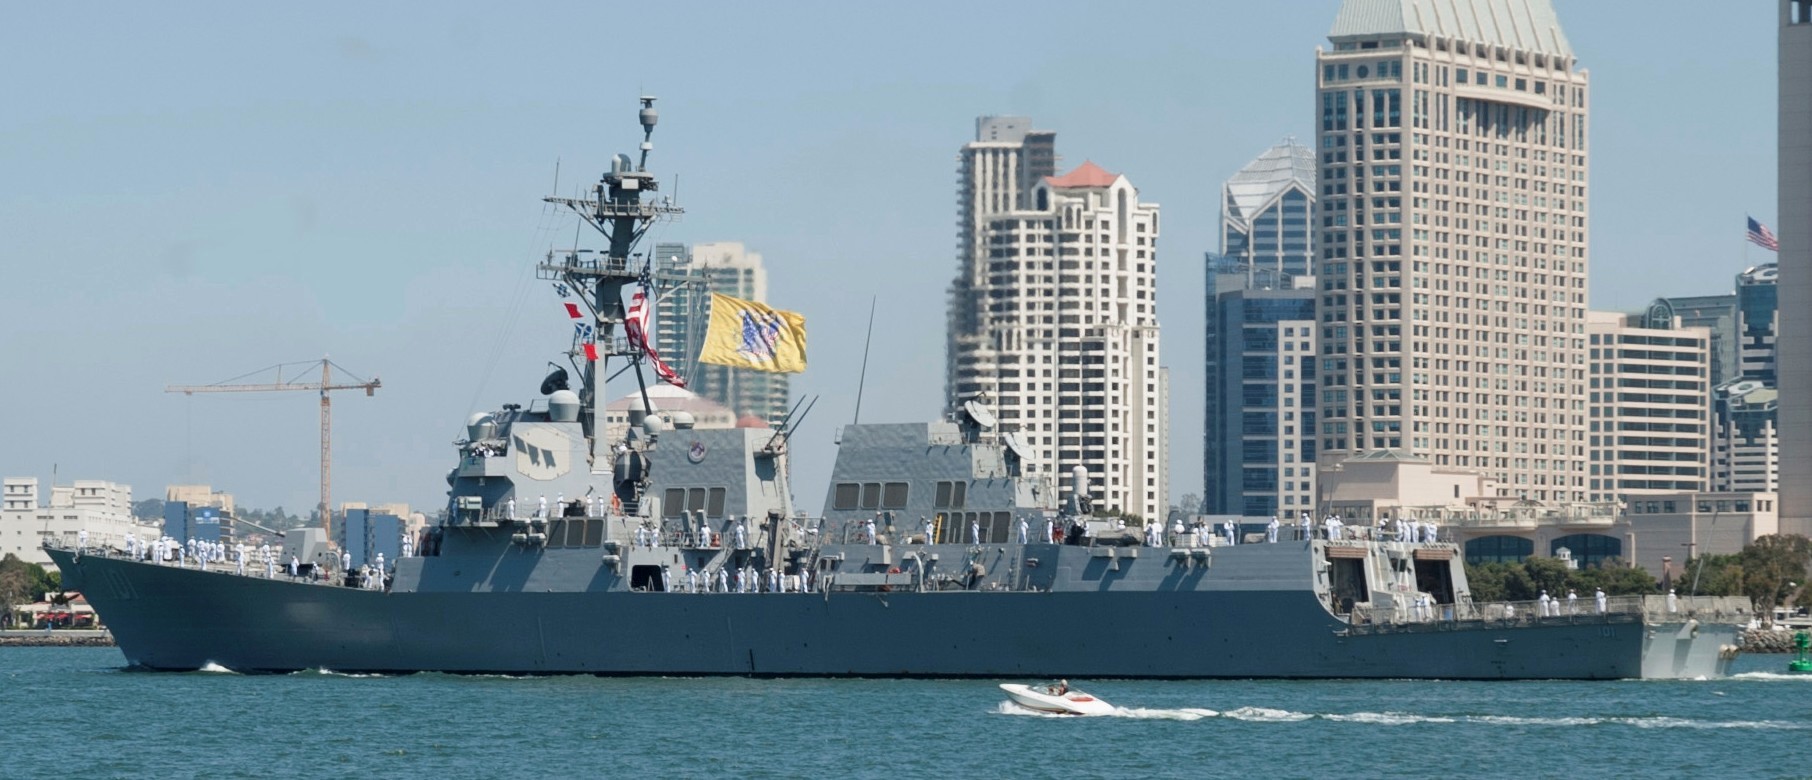 ddg-101 uss gridley arleigh burke class guided missile destroyer aegis us navy naval base san diego california 21